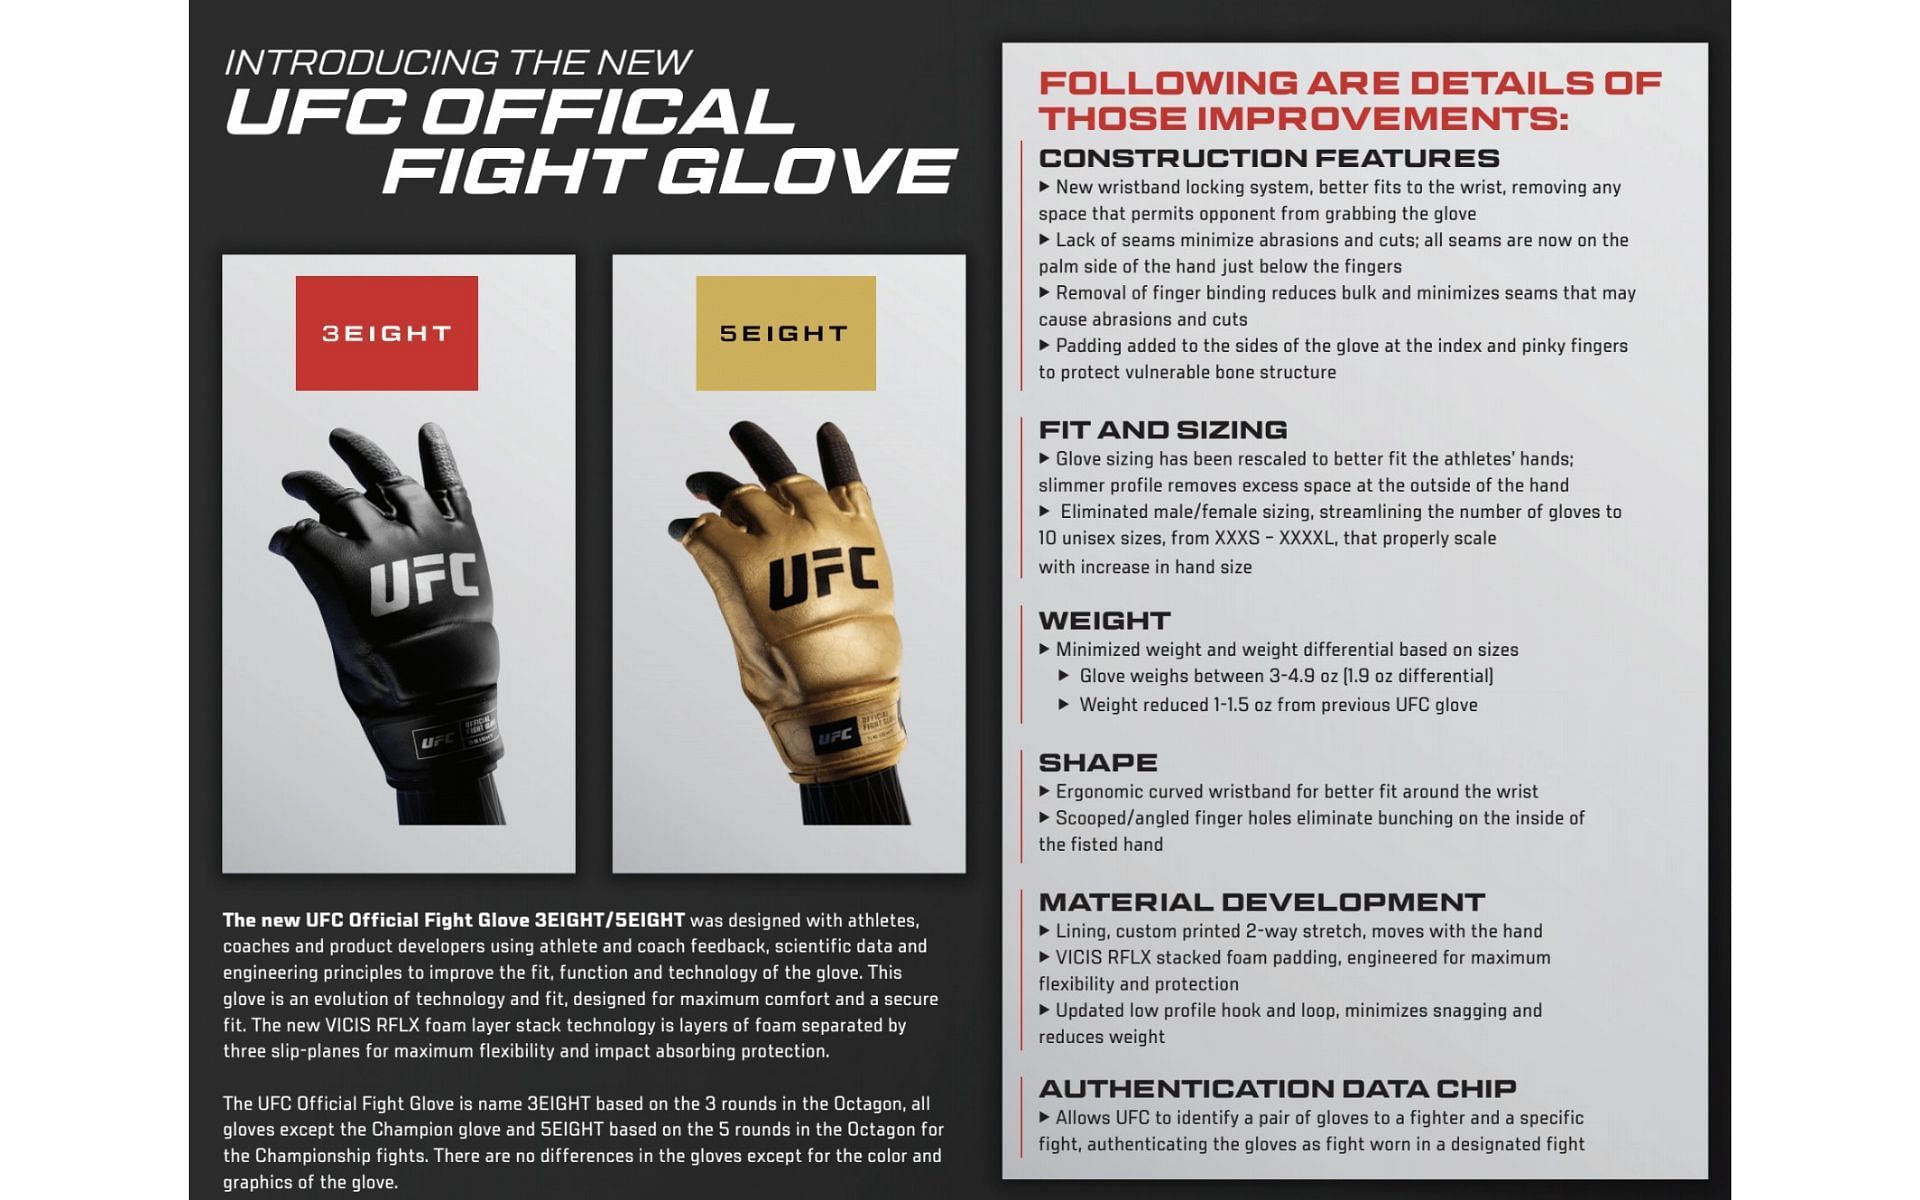 Photo regarding new UFC glove designs [Image courtesy: @aaronbronsteter - X]